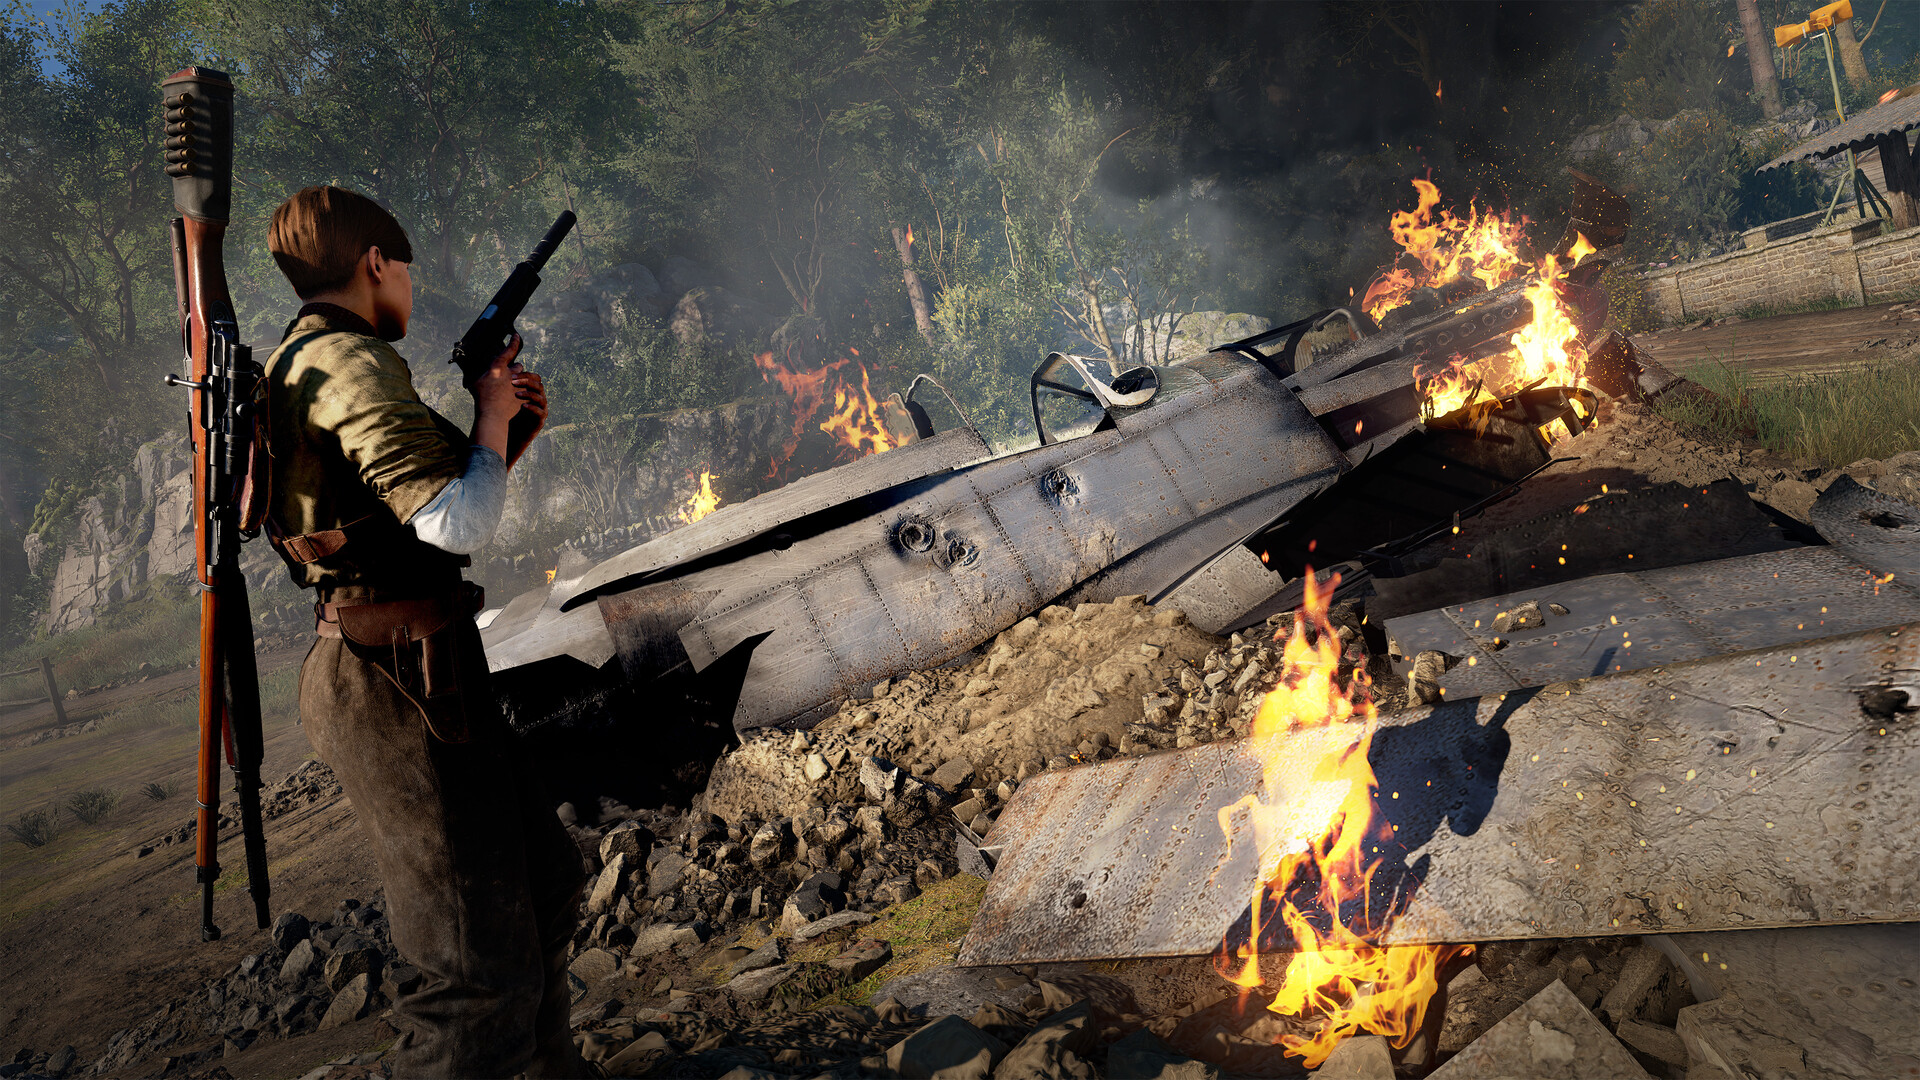 Sniper Elite 5 Season Pass Two on Steam